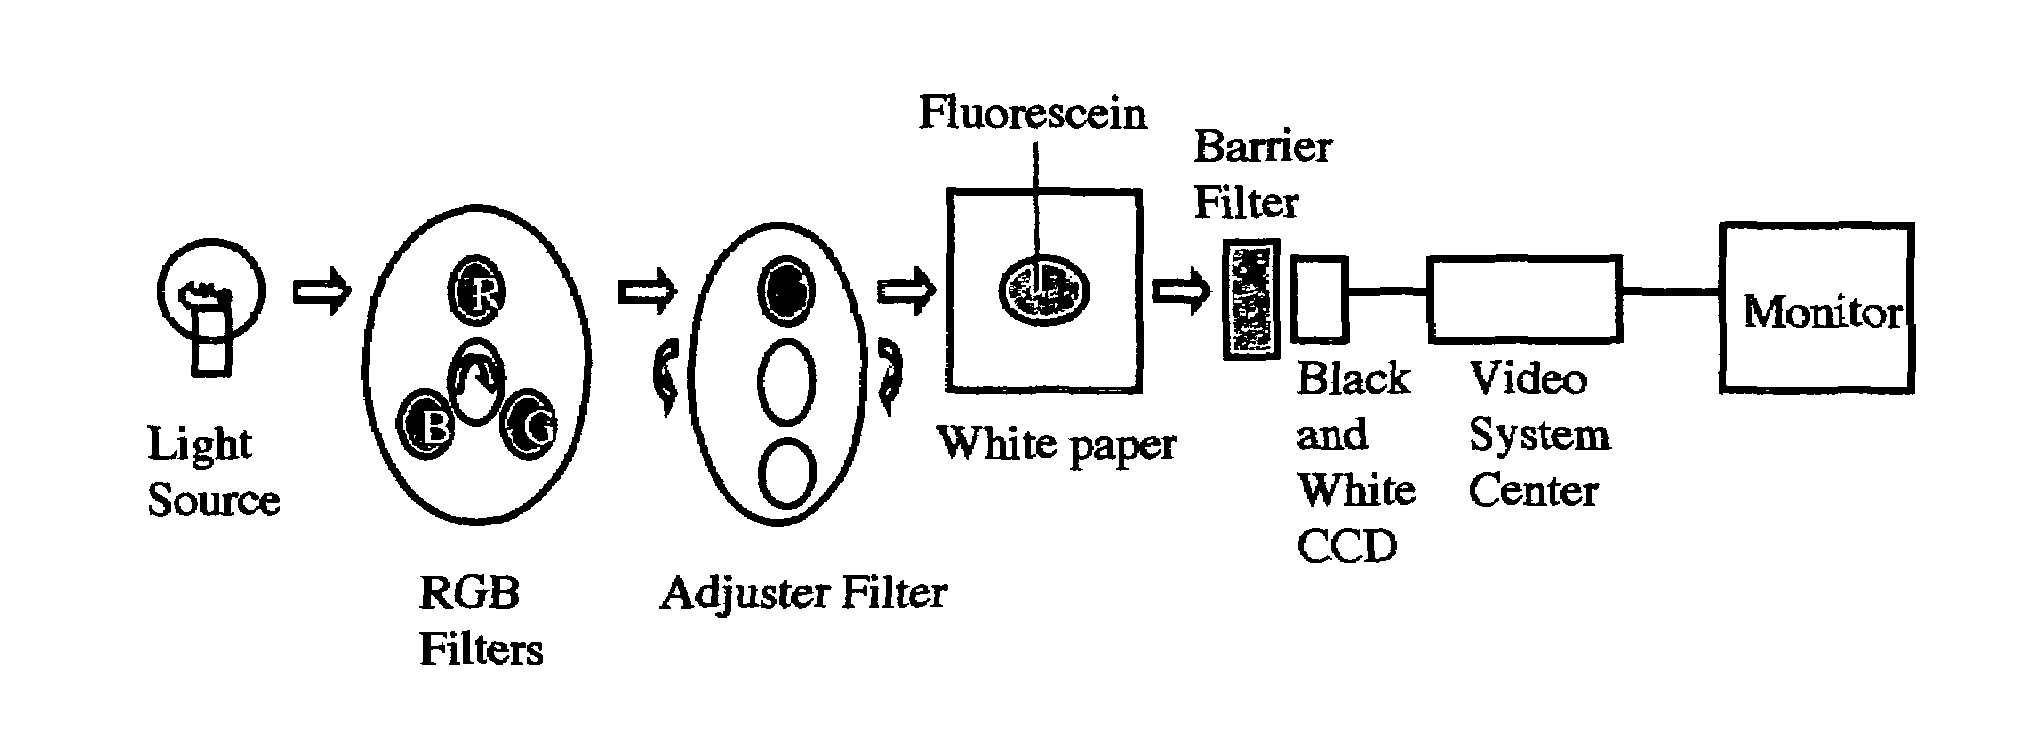 Fluorescence electronic endoscopic system